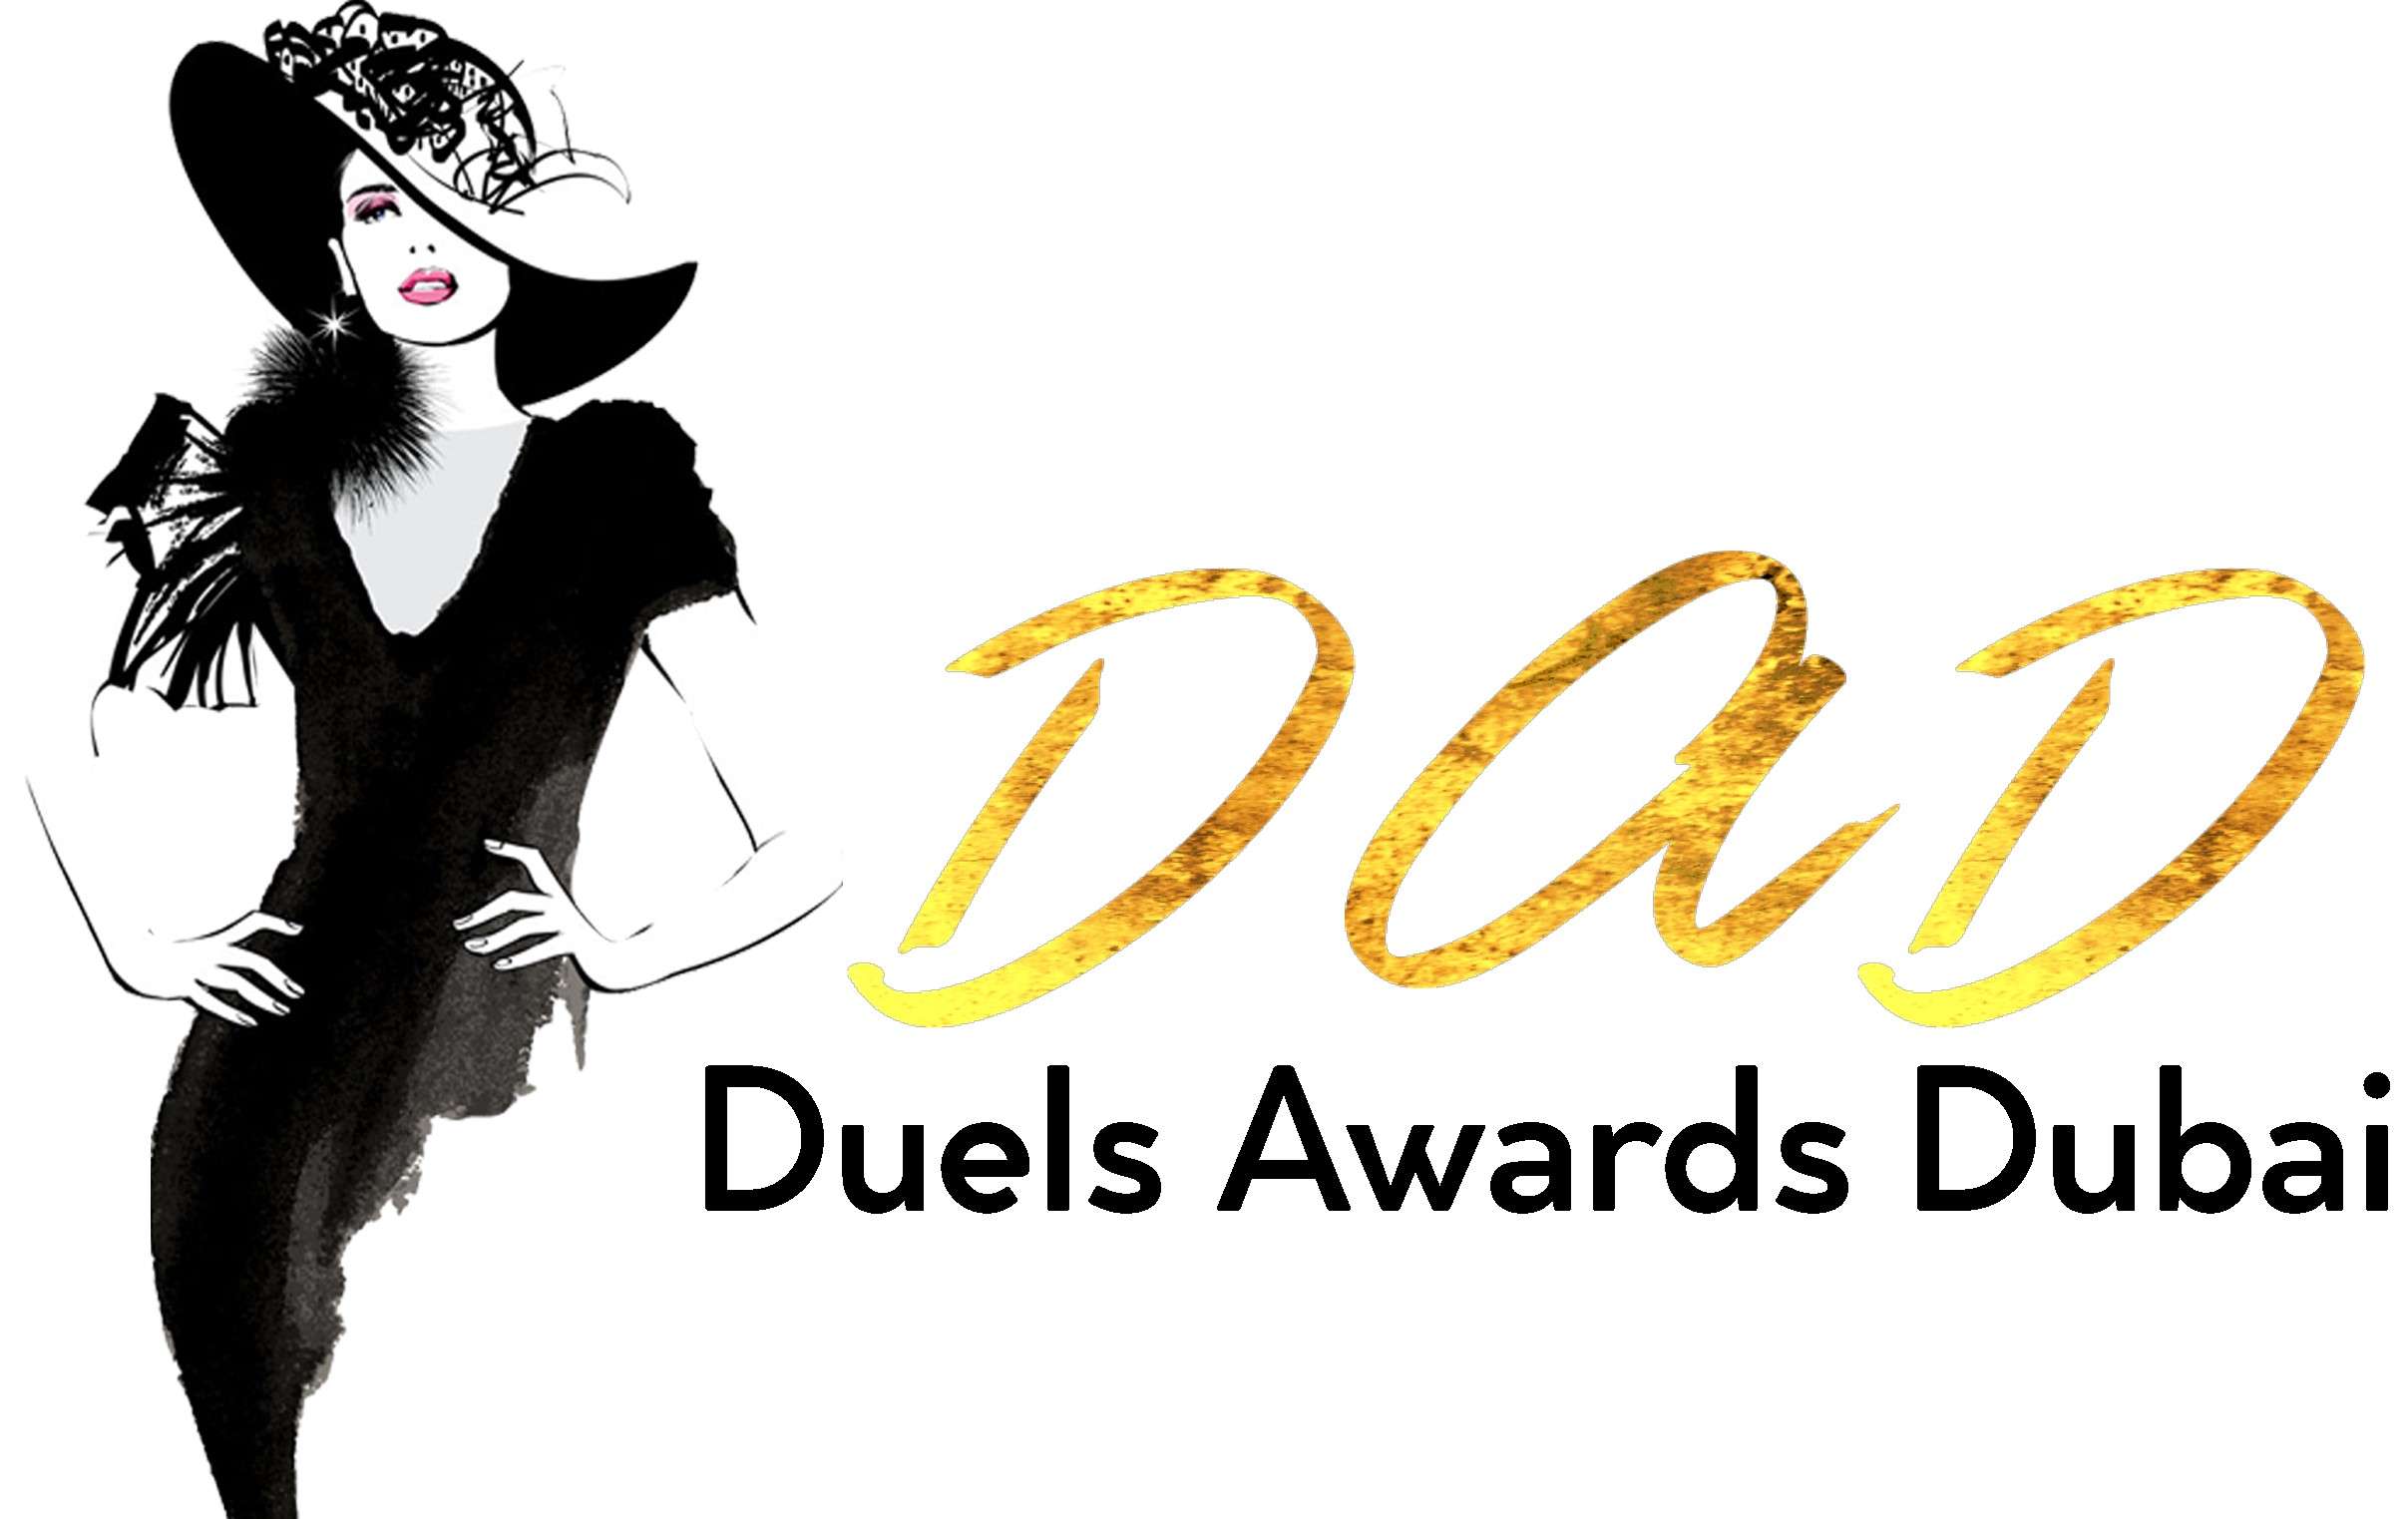 Duels Awards Dubai